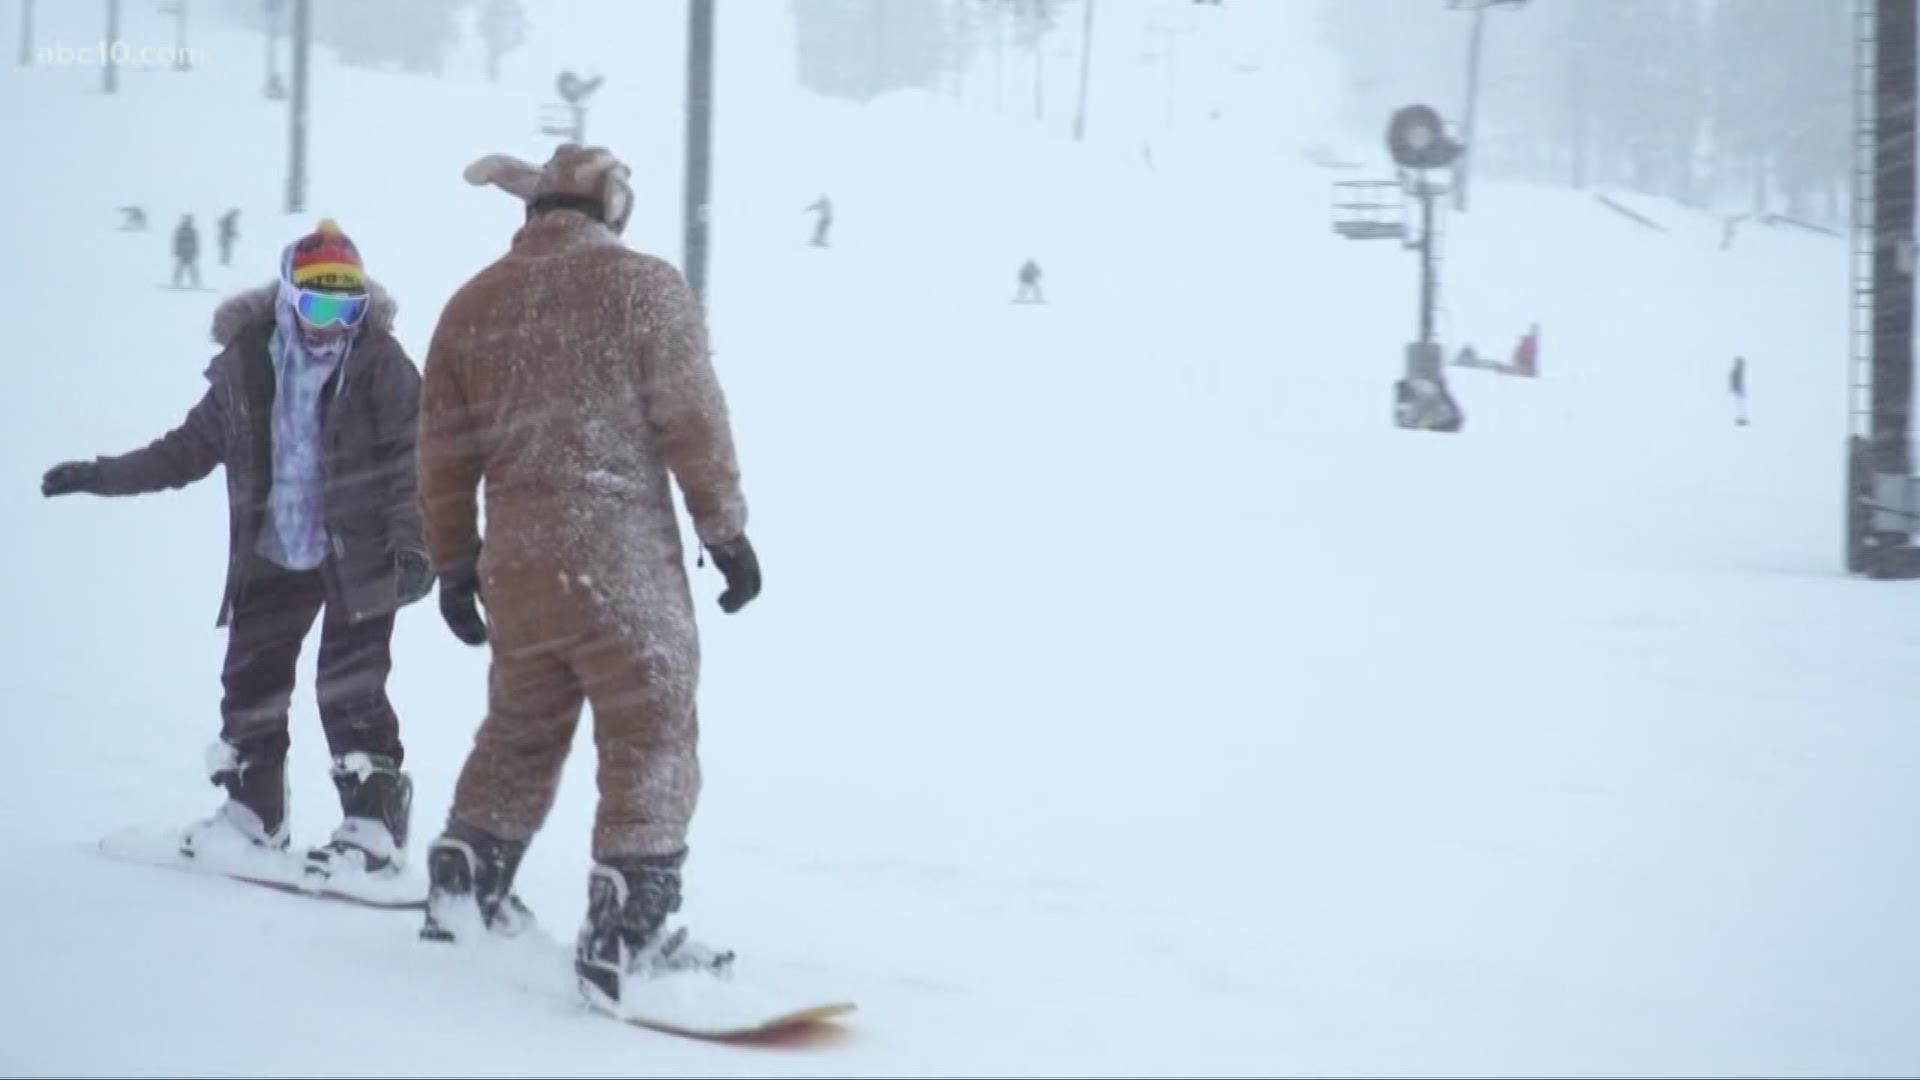 The ski resort says more than 100 inches of snow has already fallen this season.